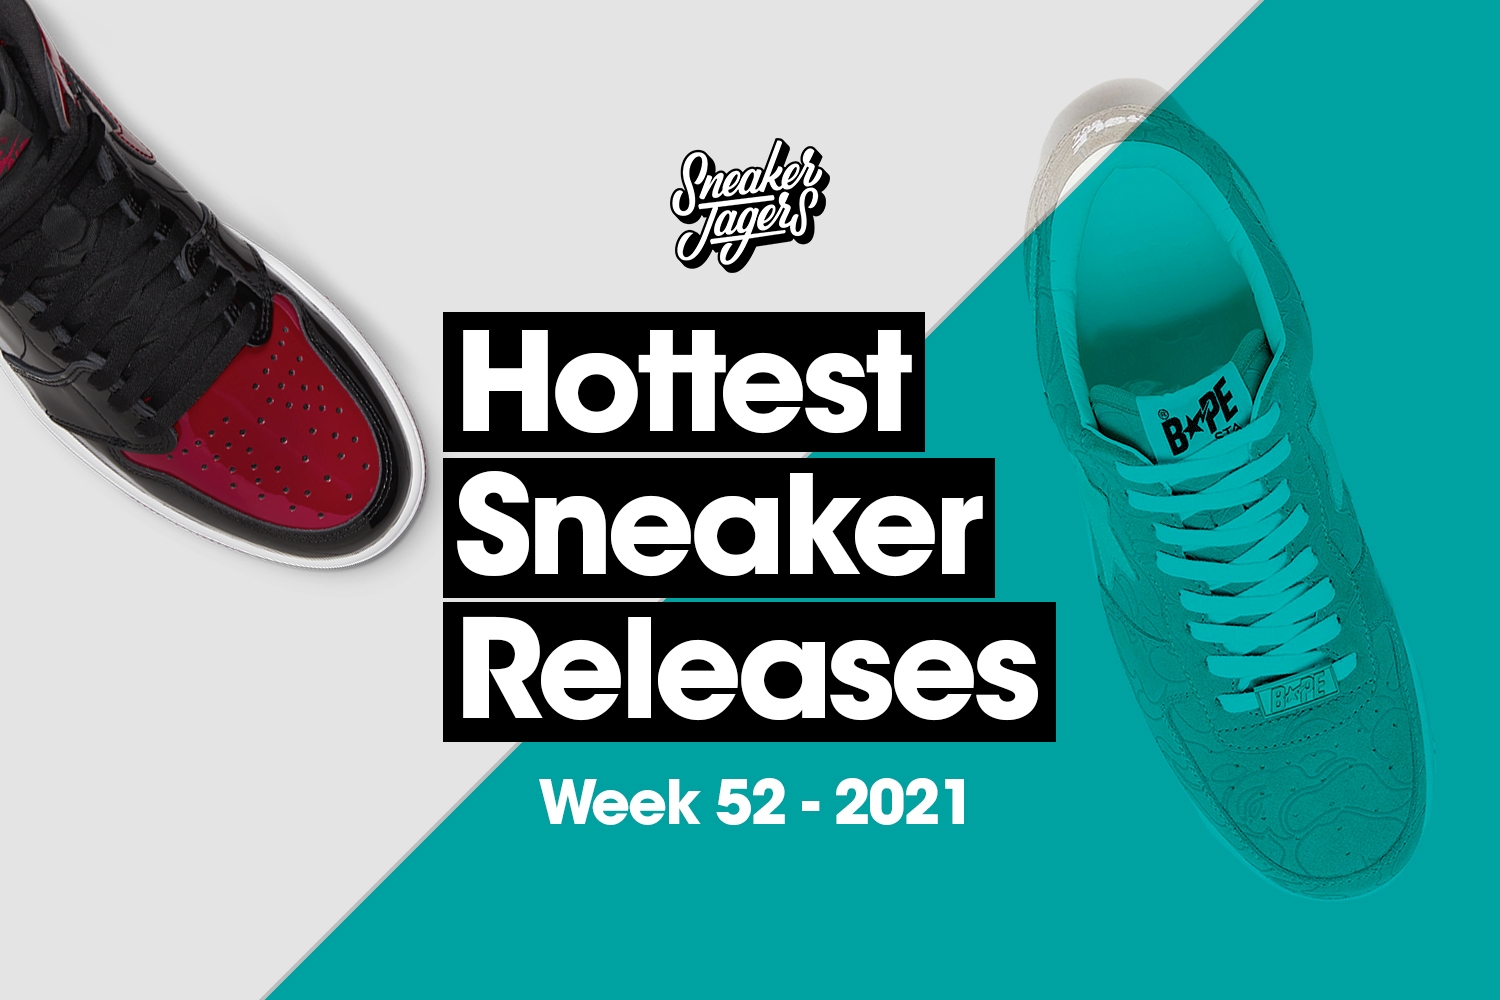 Hottest Sneaker Releases Week 52